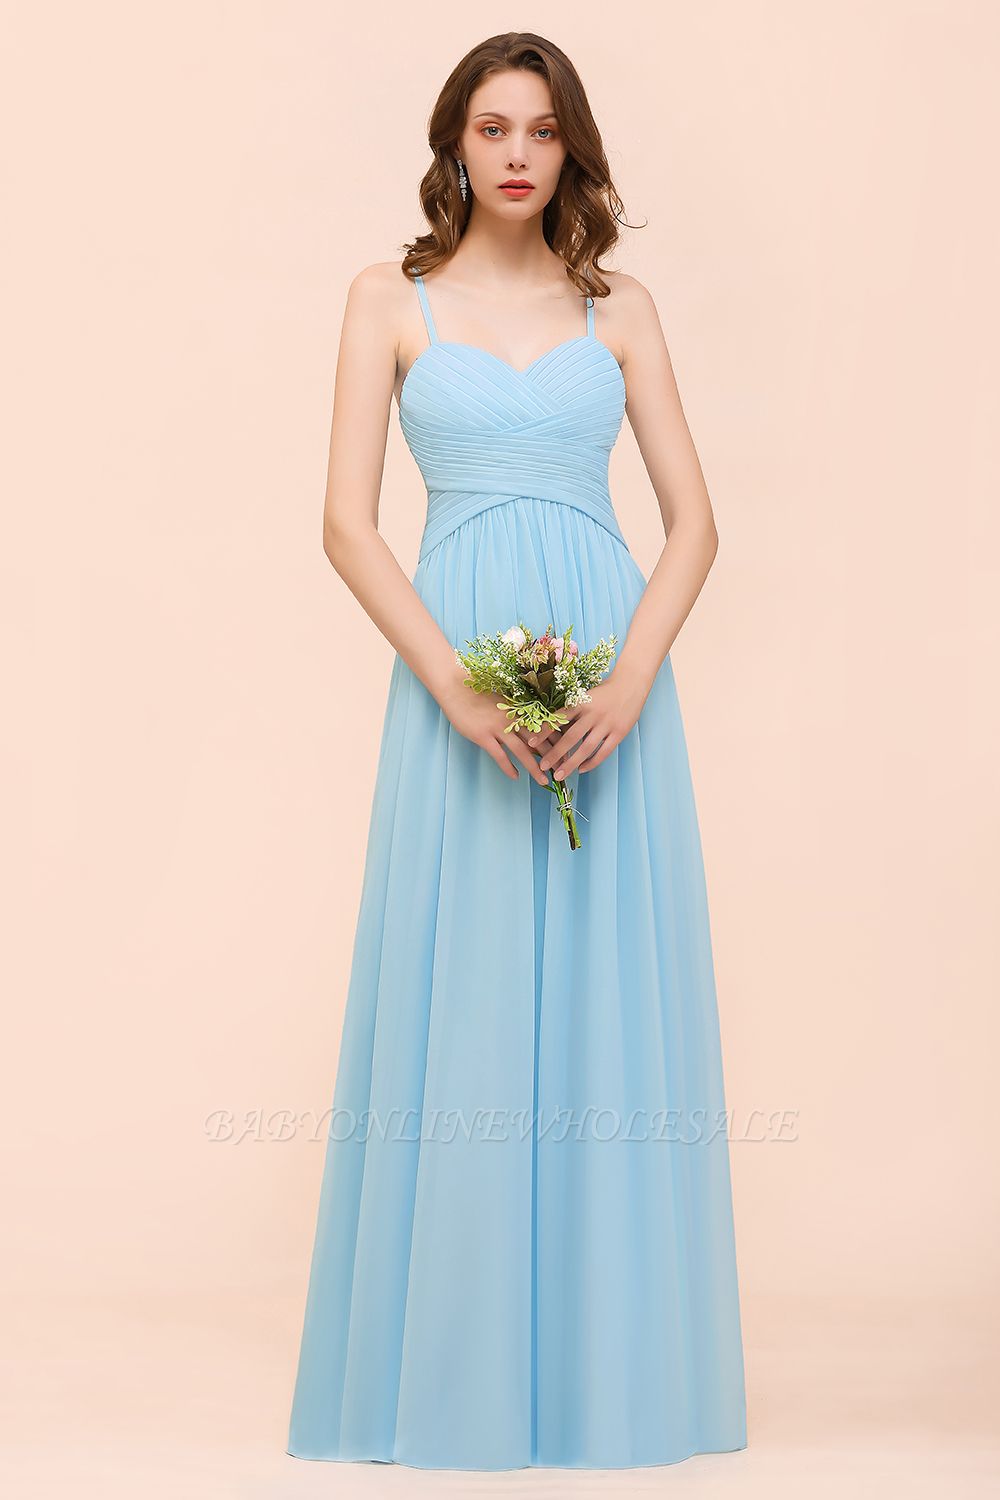 Sky Blue Sweetheart Chiffon Long Bridesmaid Dress Aline Wedding Party Dress with Straps